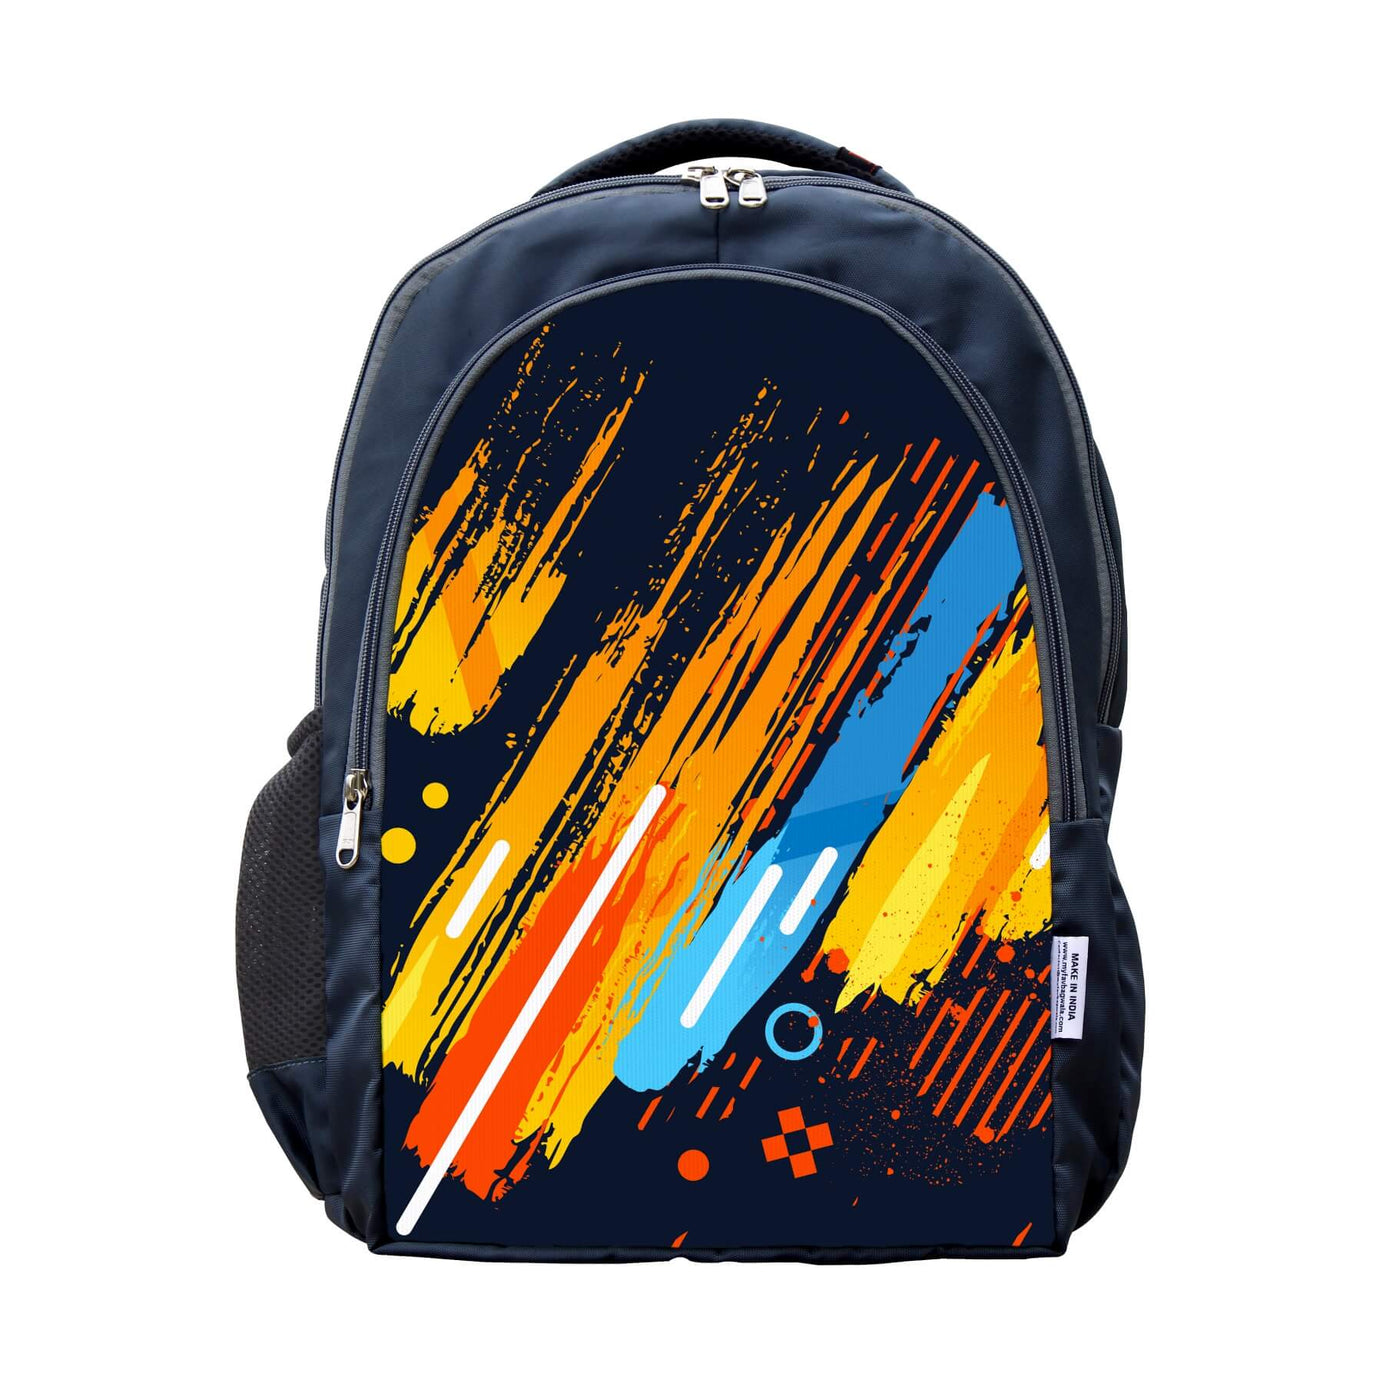 MY FAV Digital Print Laptop Backpack for College/School - 30 Litre